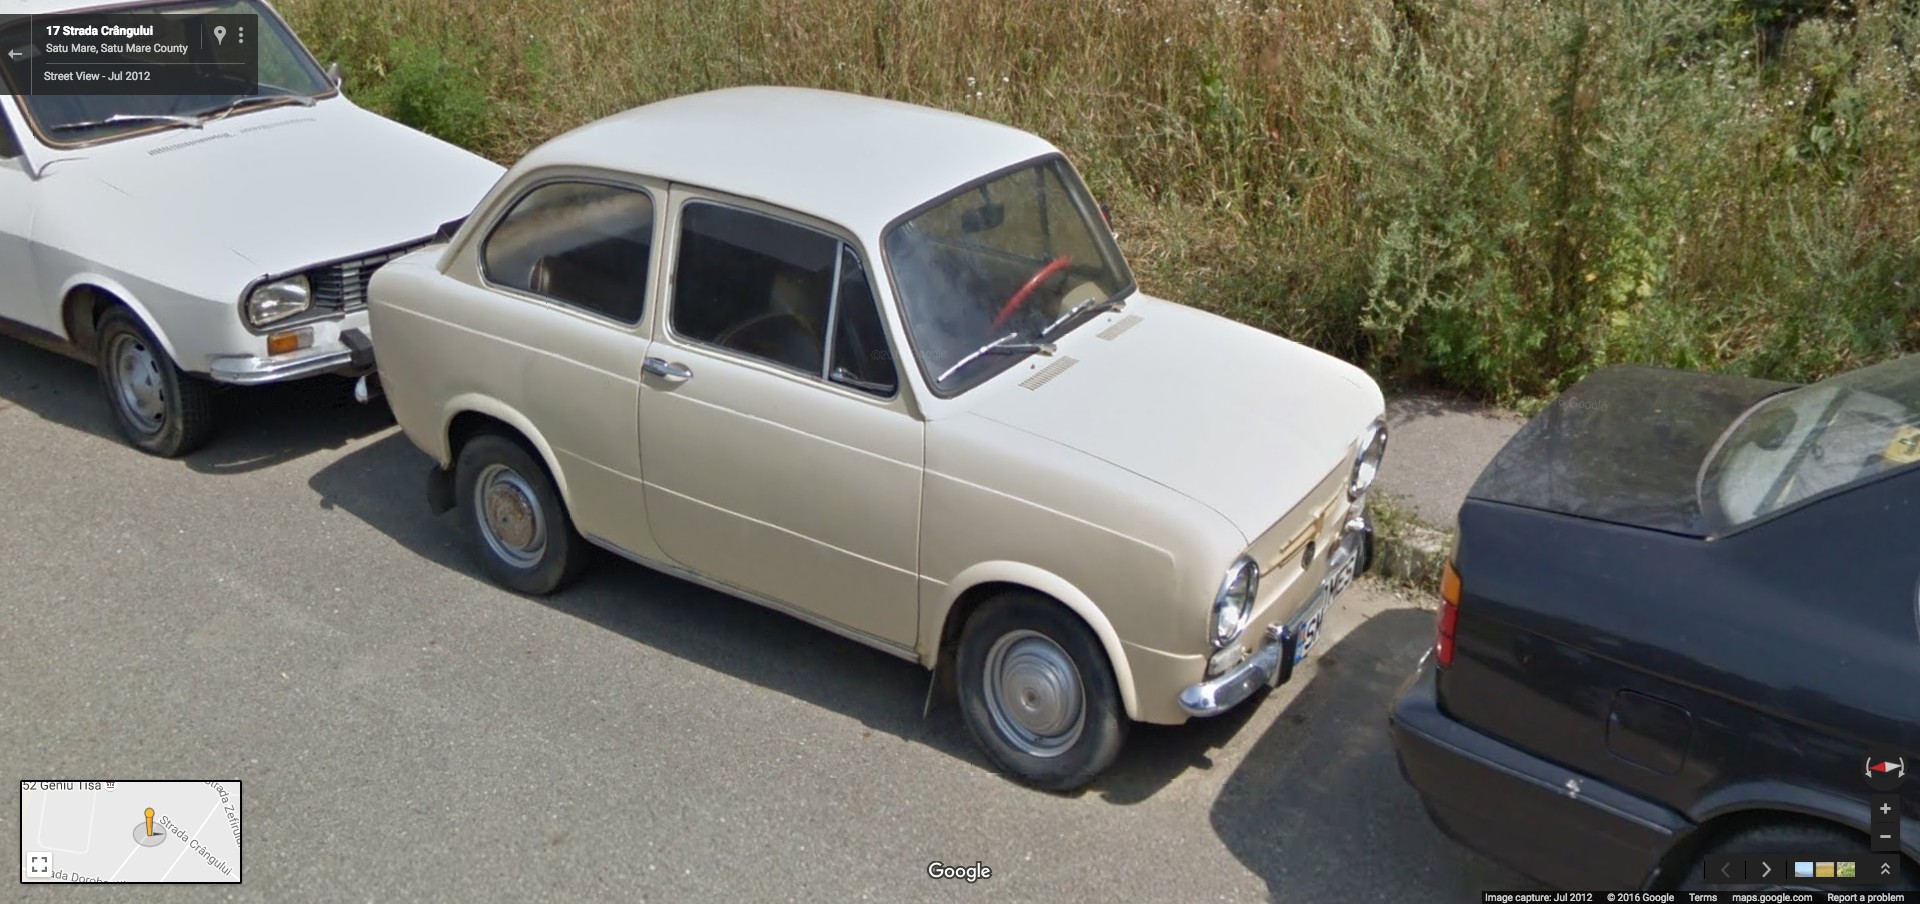 Fiat 850 - Satu Mare